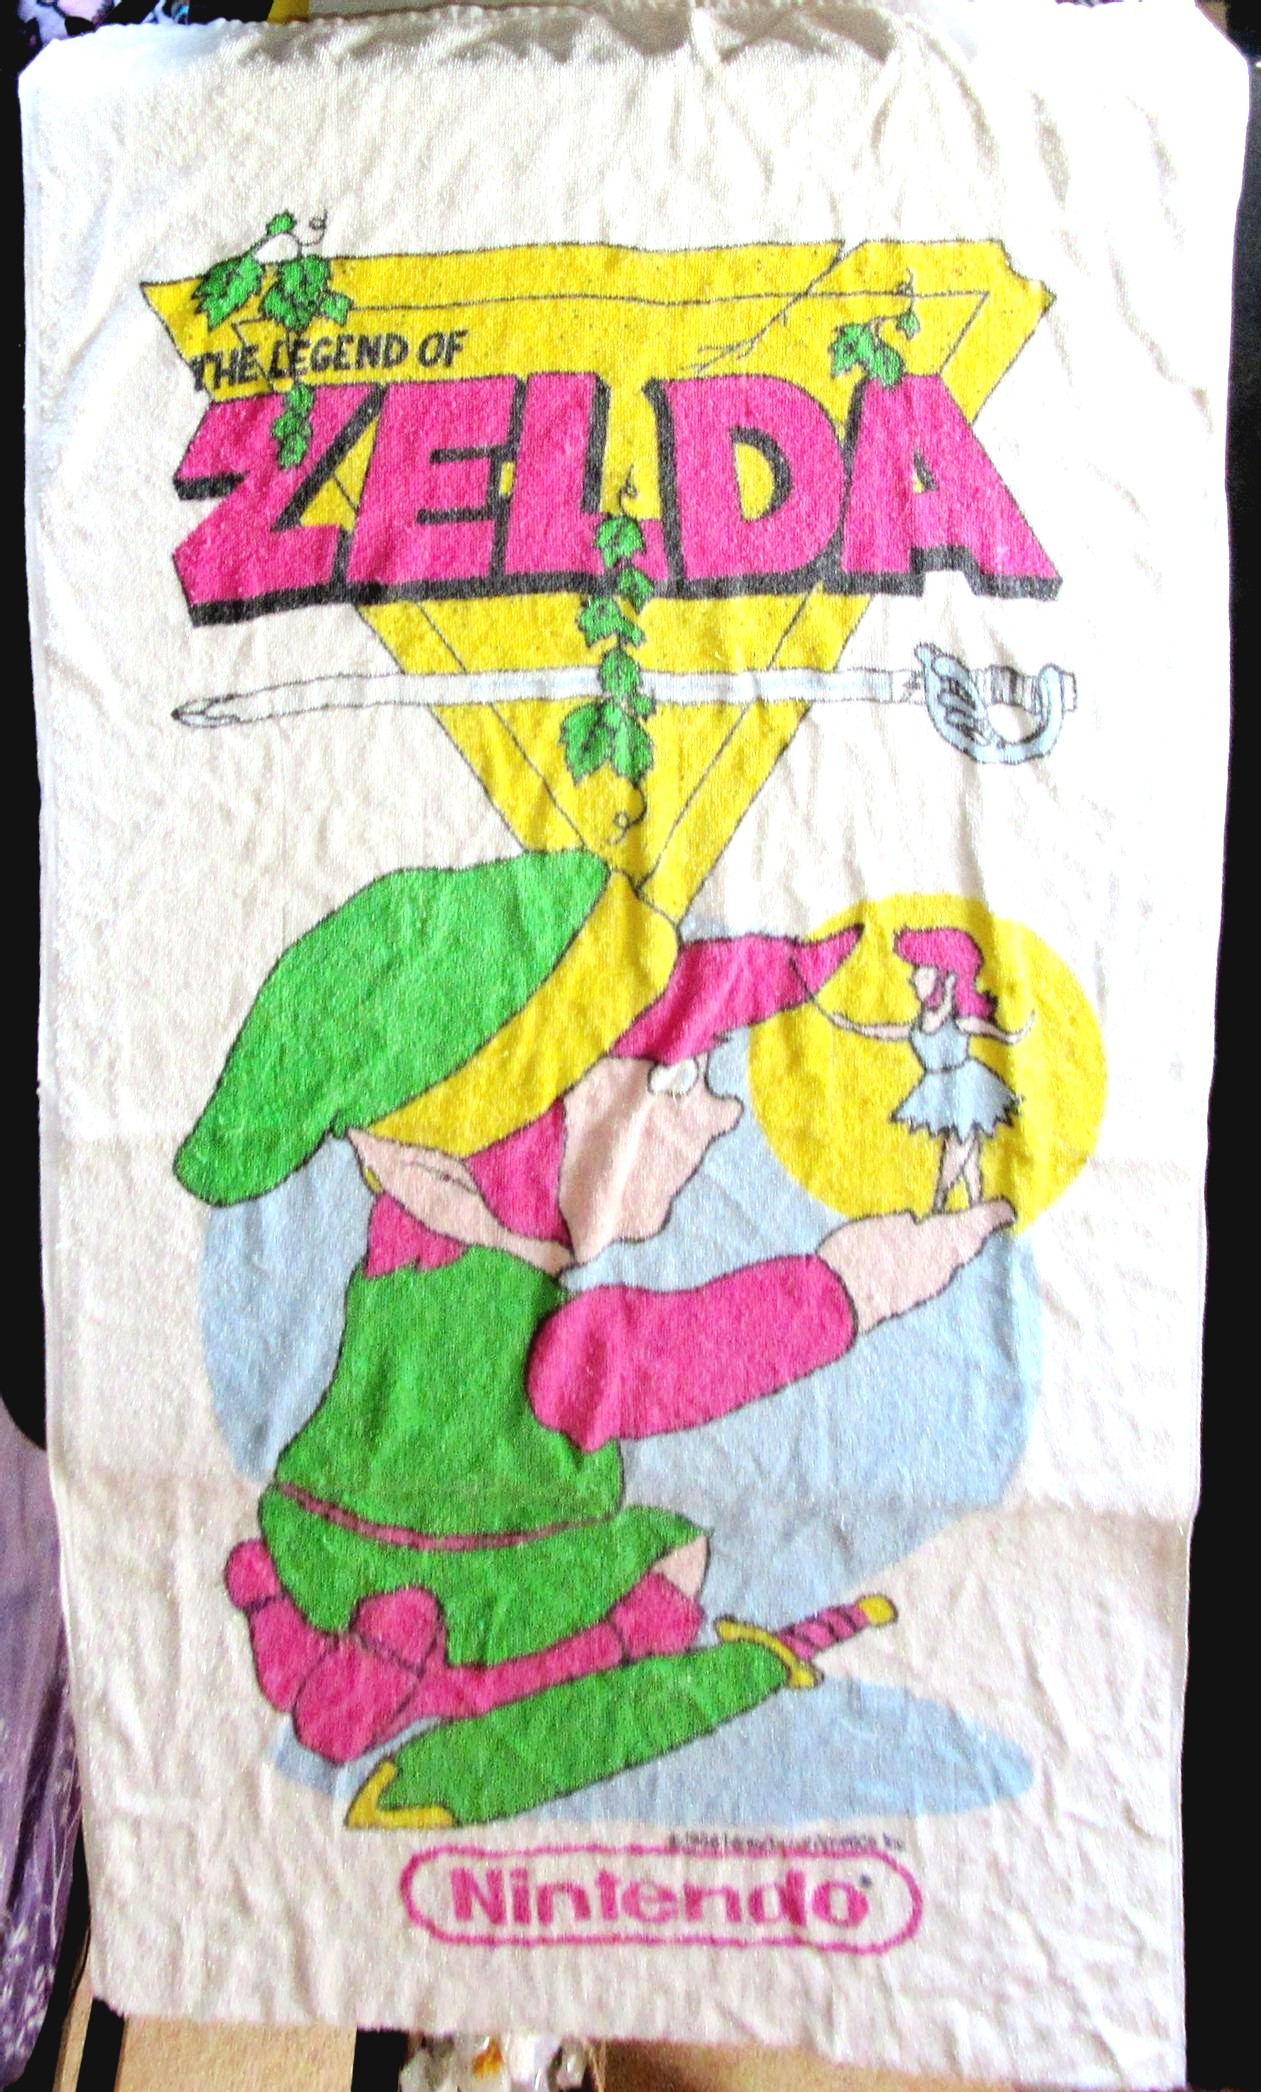 Scratch Card (Zelda Screen 10) by TOPPS, USA 1989.